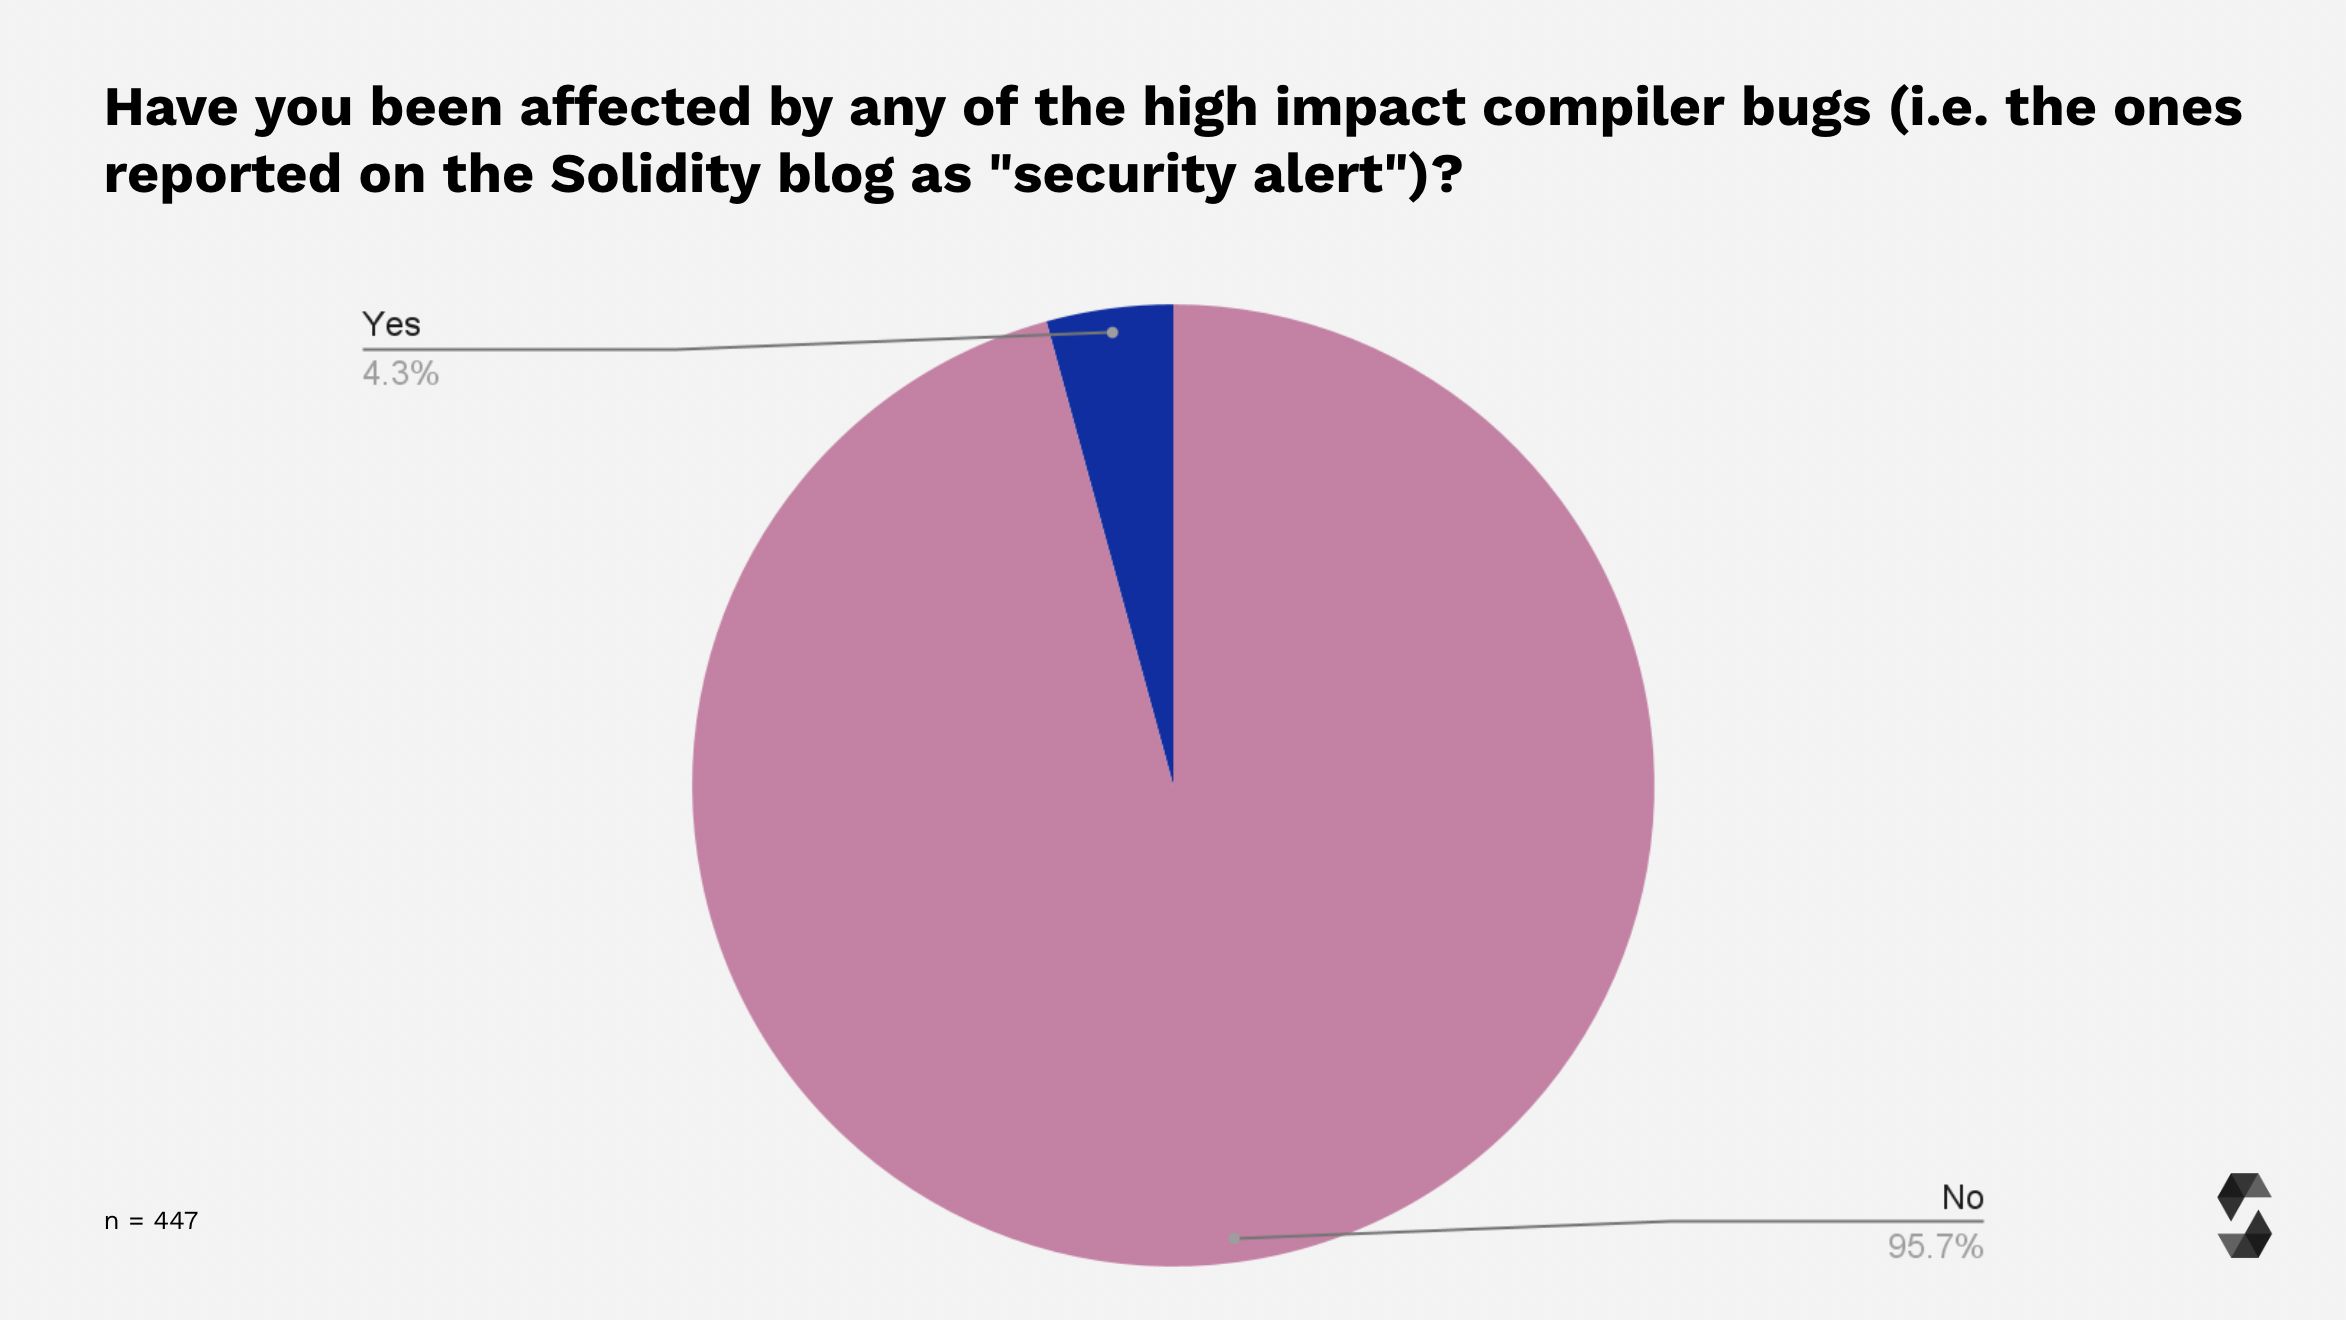 High impact compiler bugs